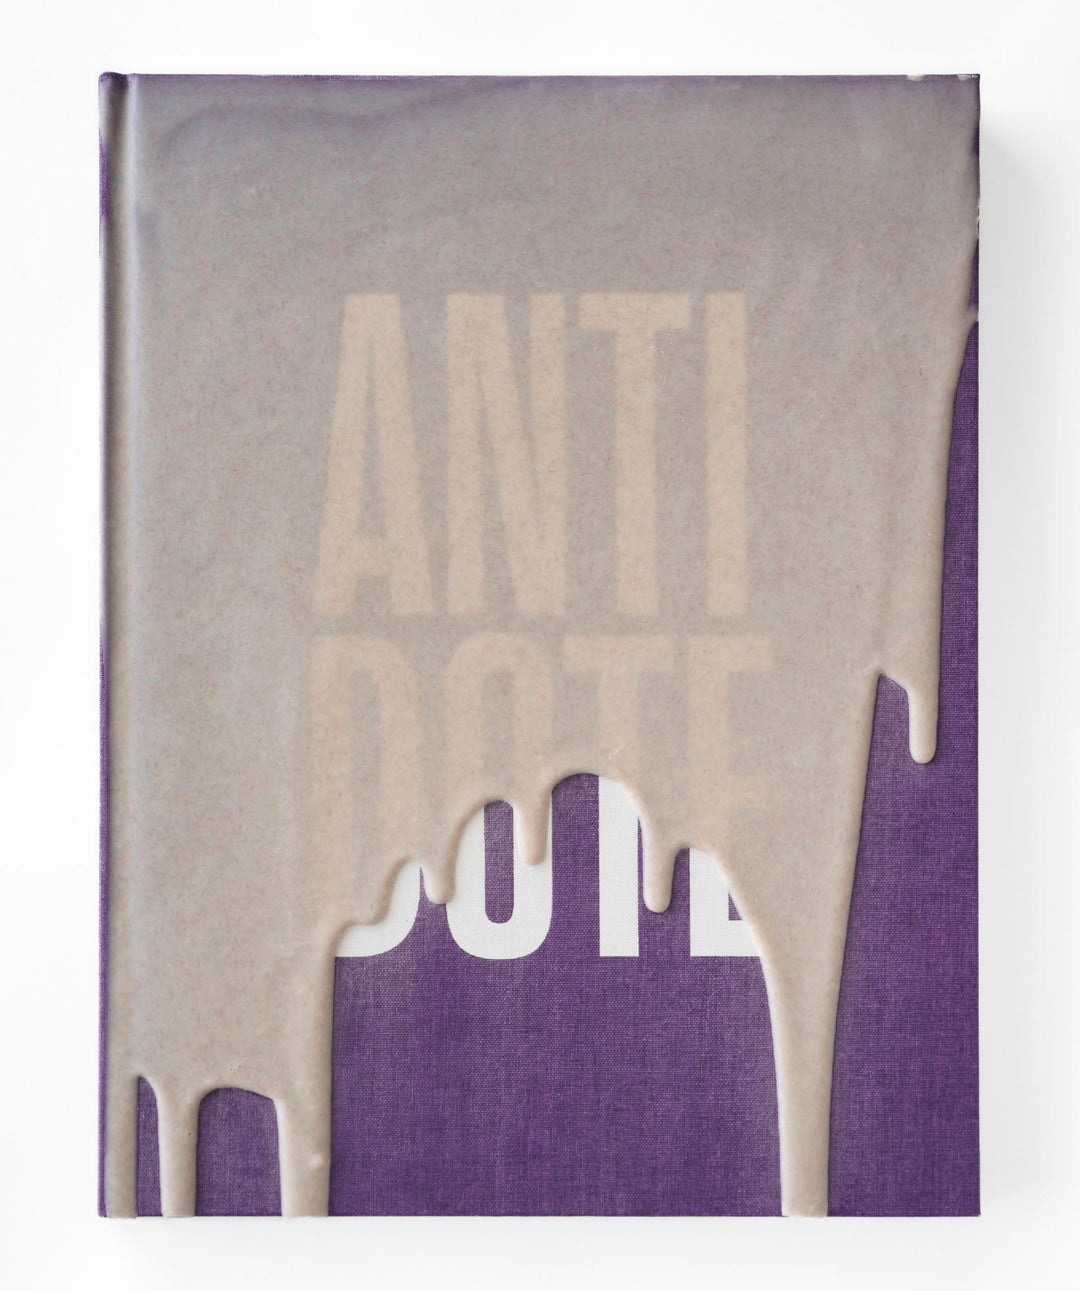 Antidote by Laura Hospes - Tipi bookshop